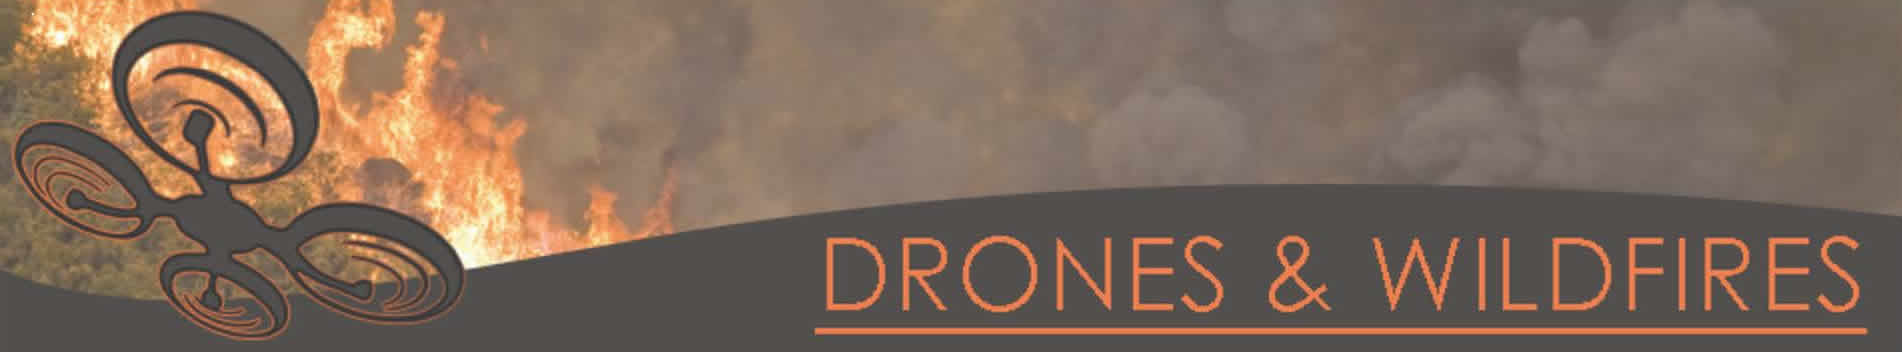 Drones & Wildfire